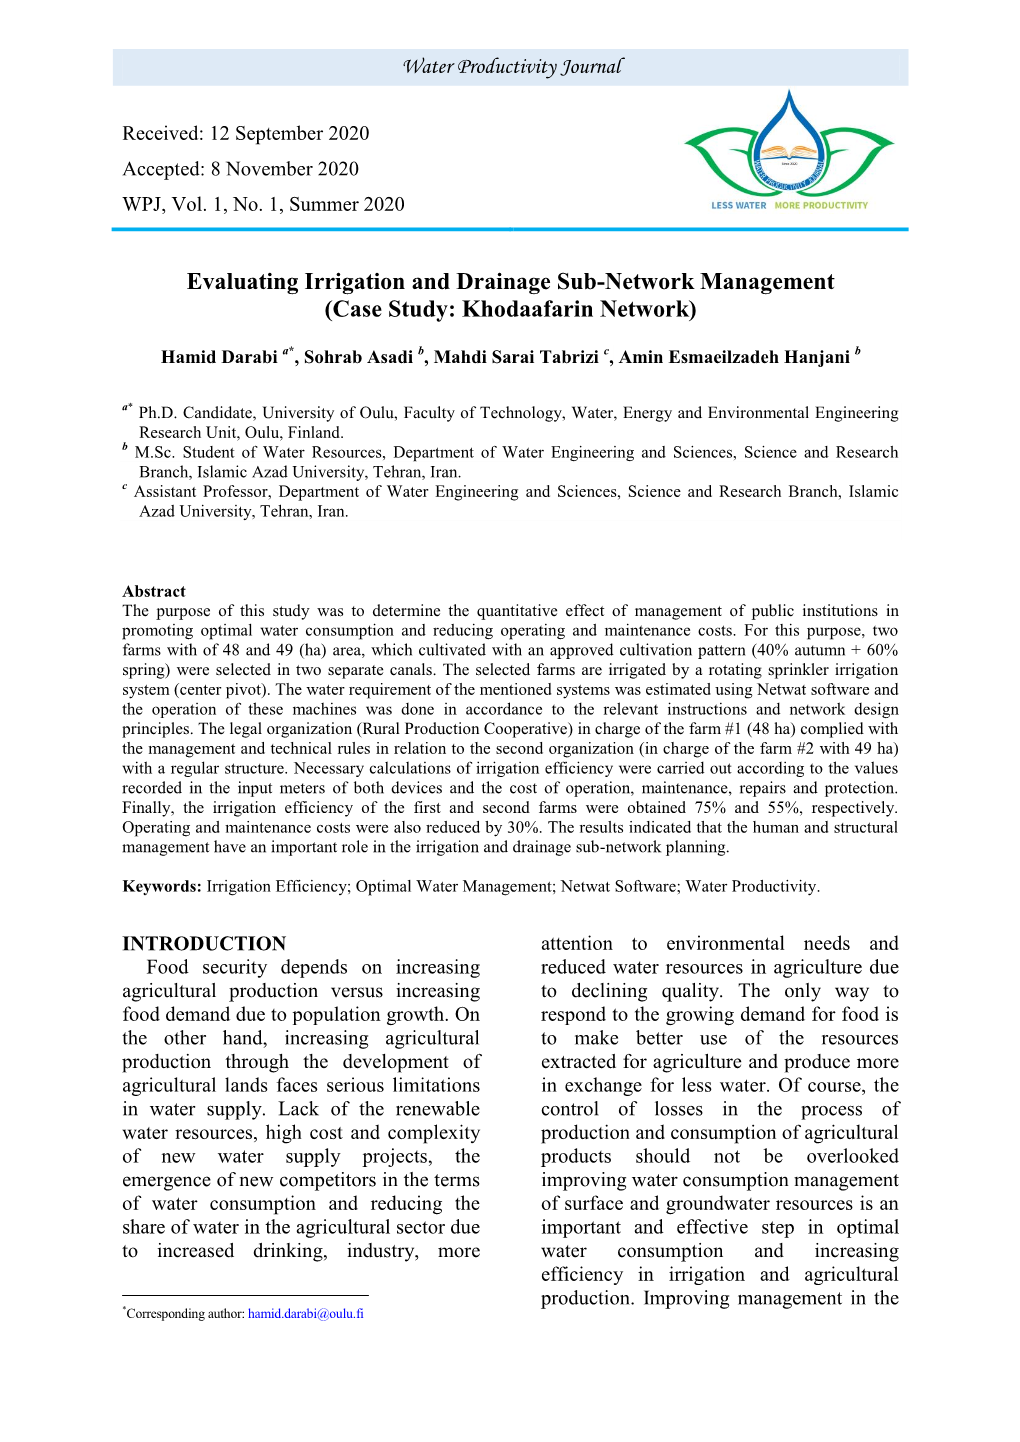 Evaluating Irrigation and Drainage Sub-Network Management (Case Study: Khodaafarin Network)